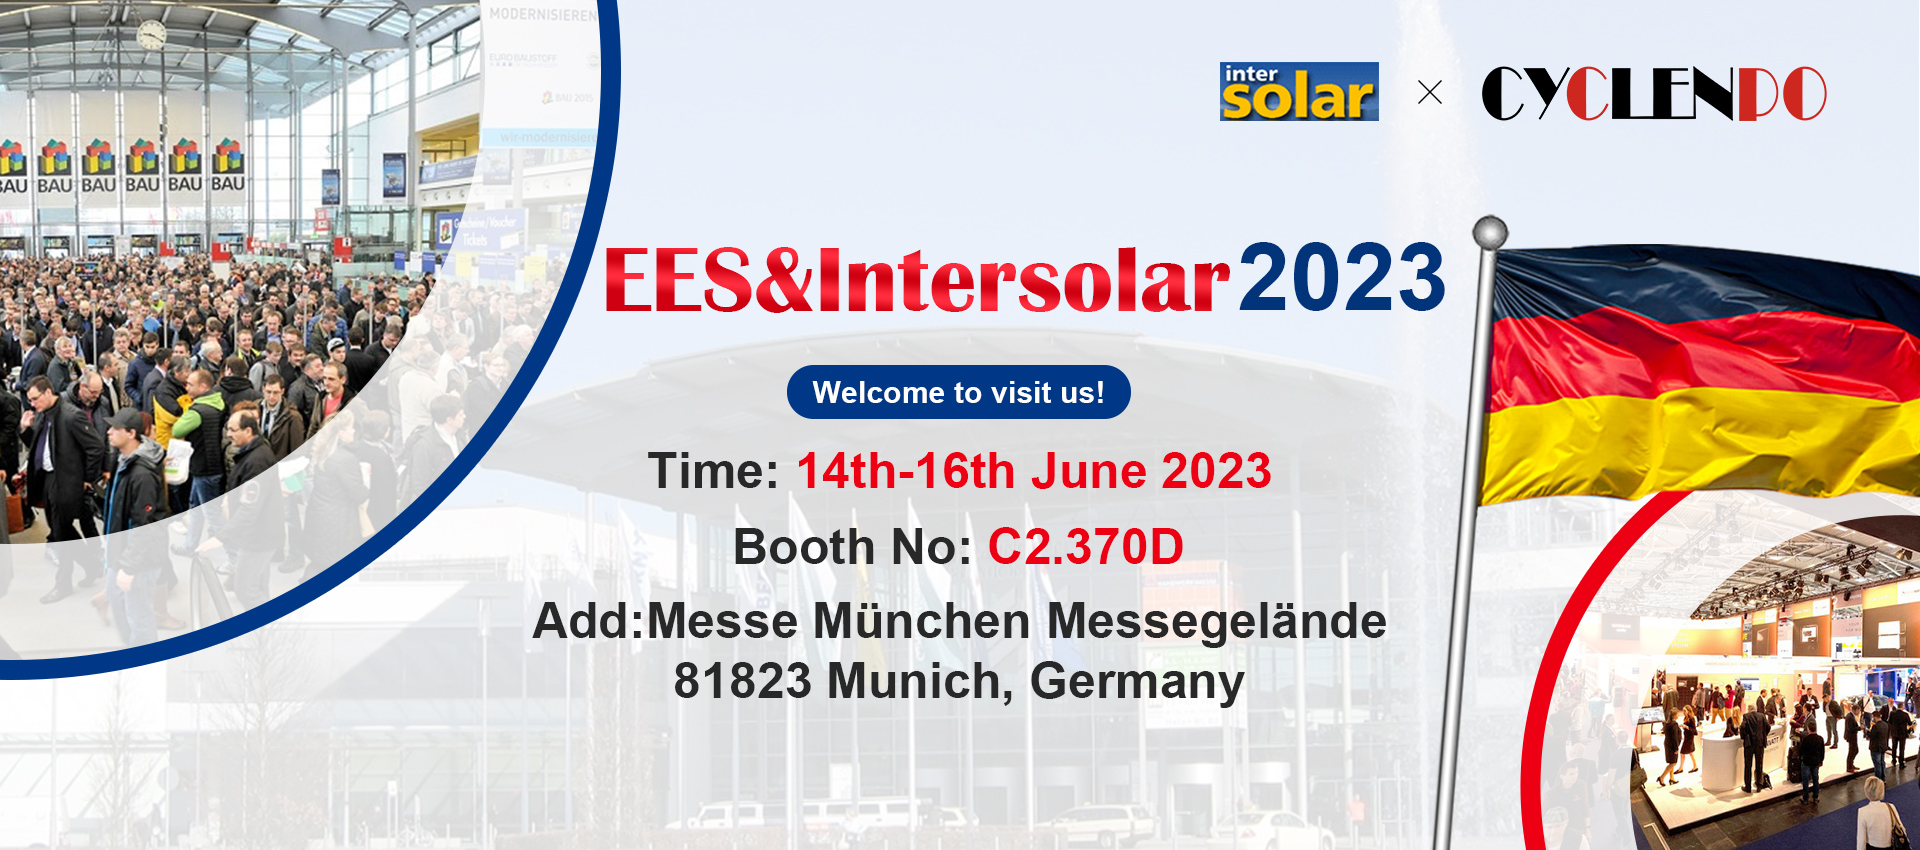 Germany EES&Intersolar 2023 exhibition